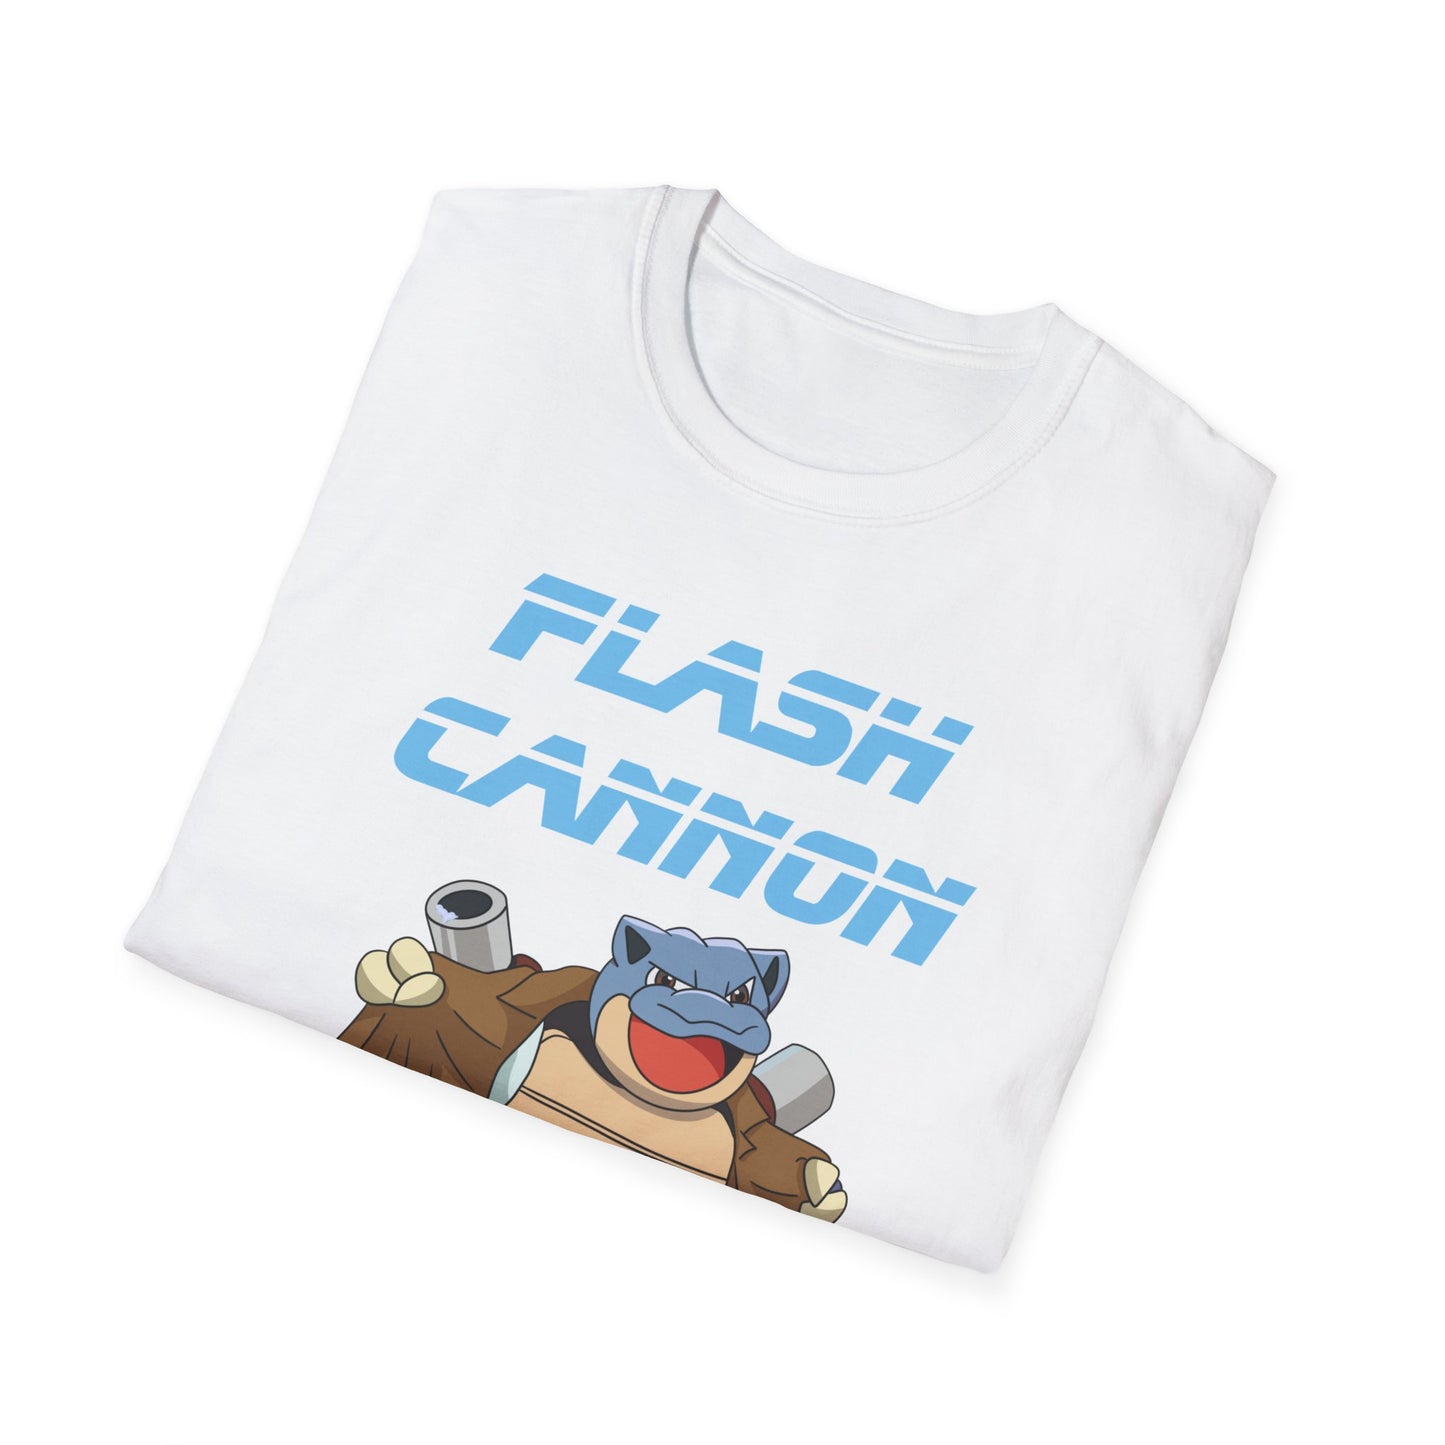 Flash Cannon - Canada